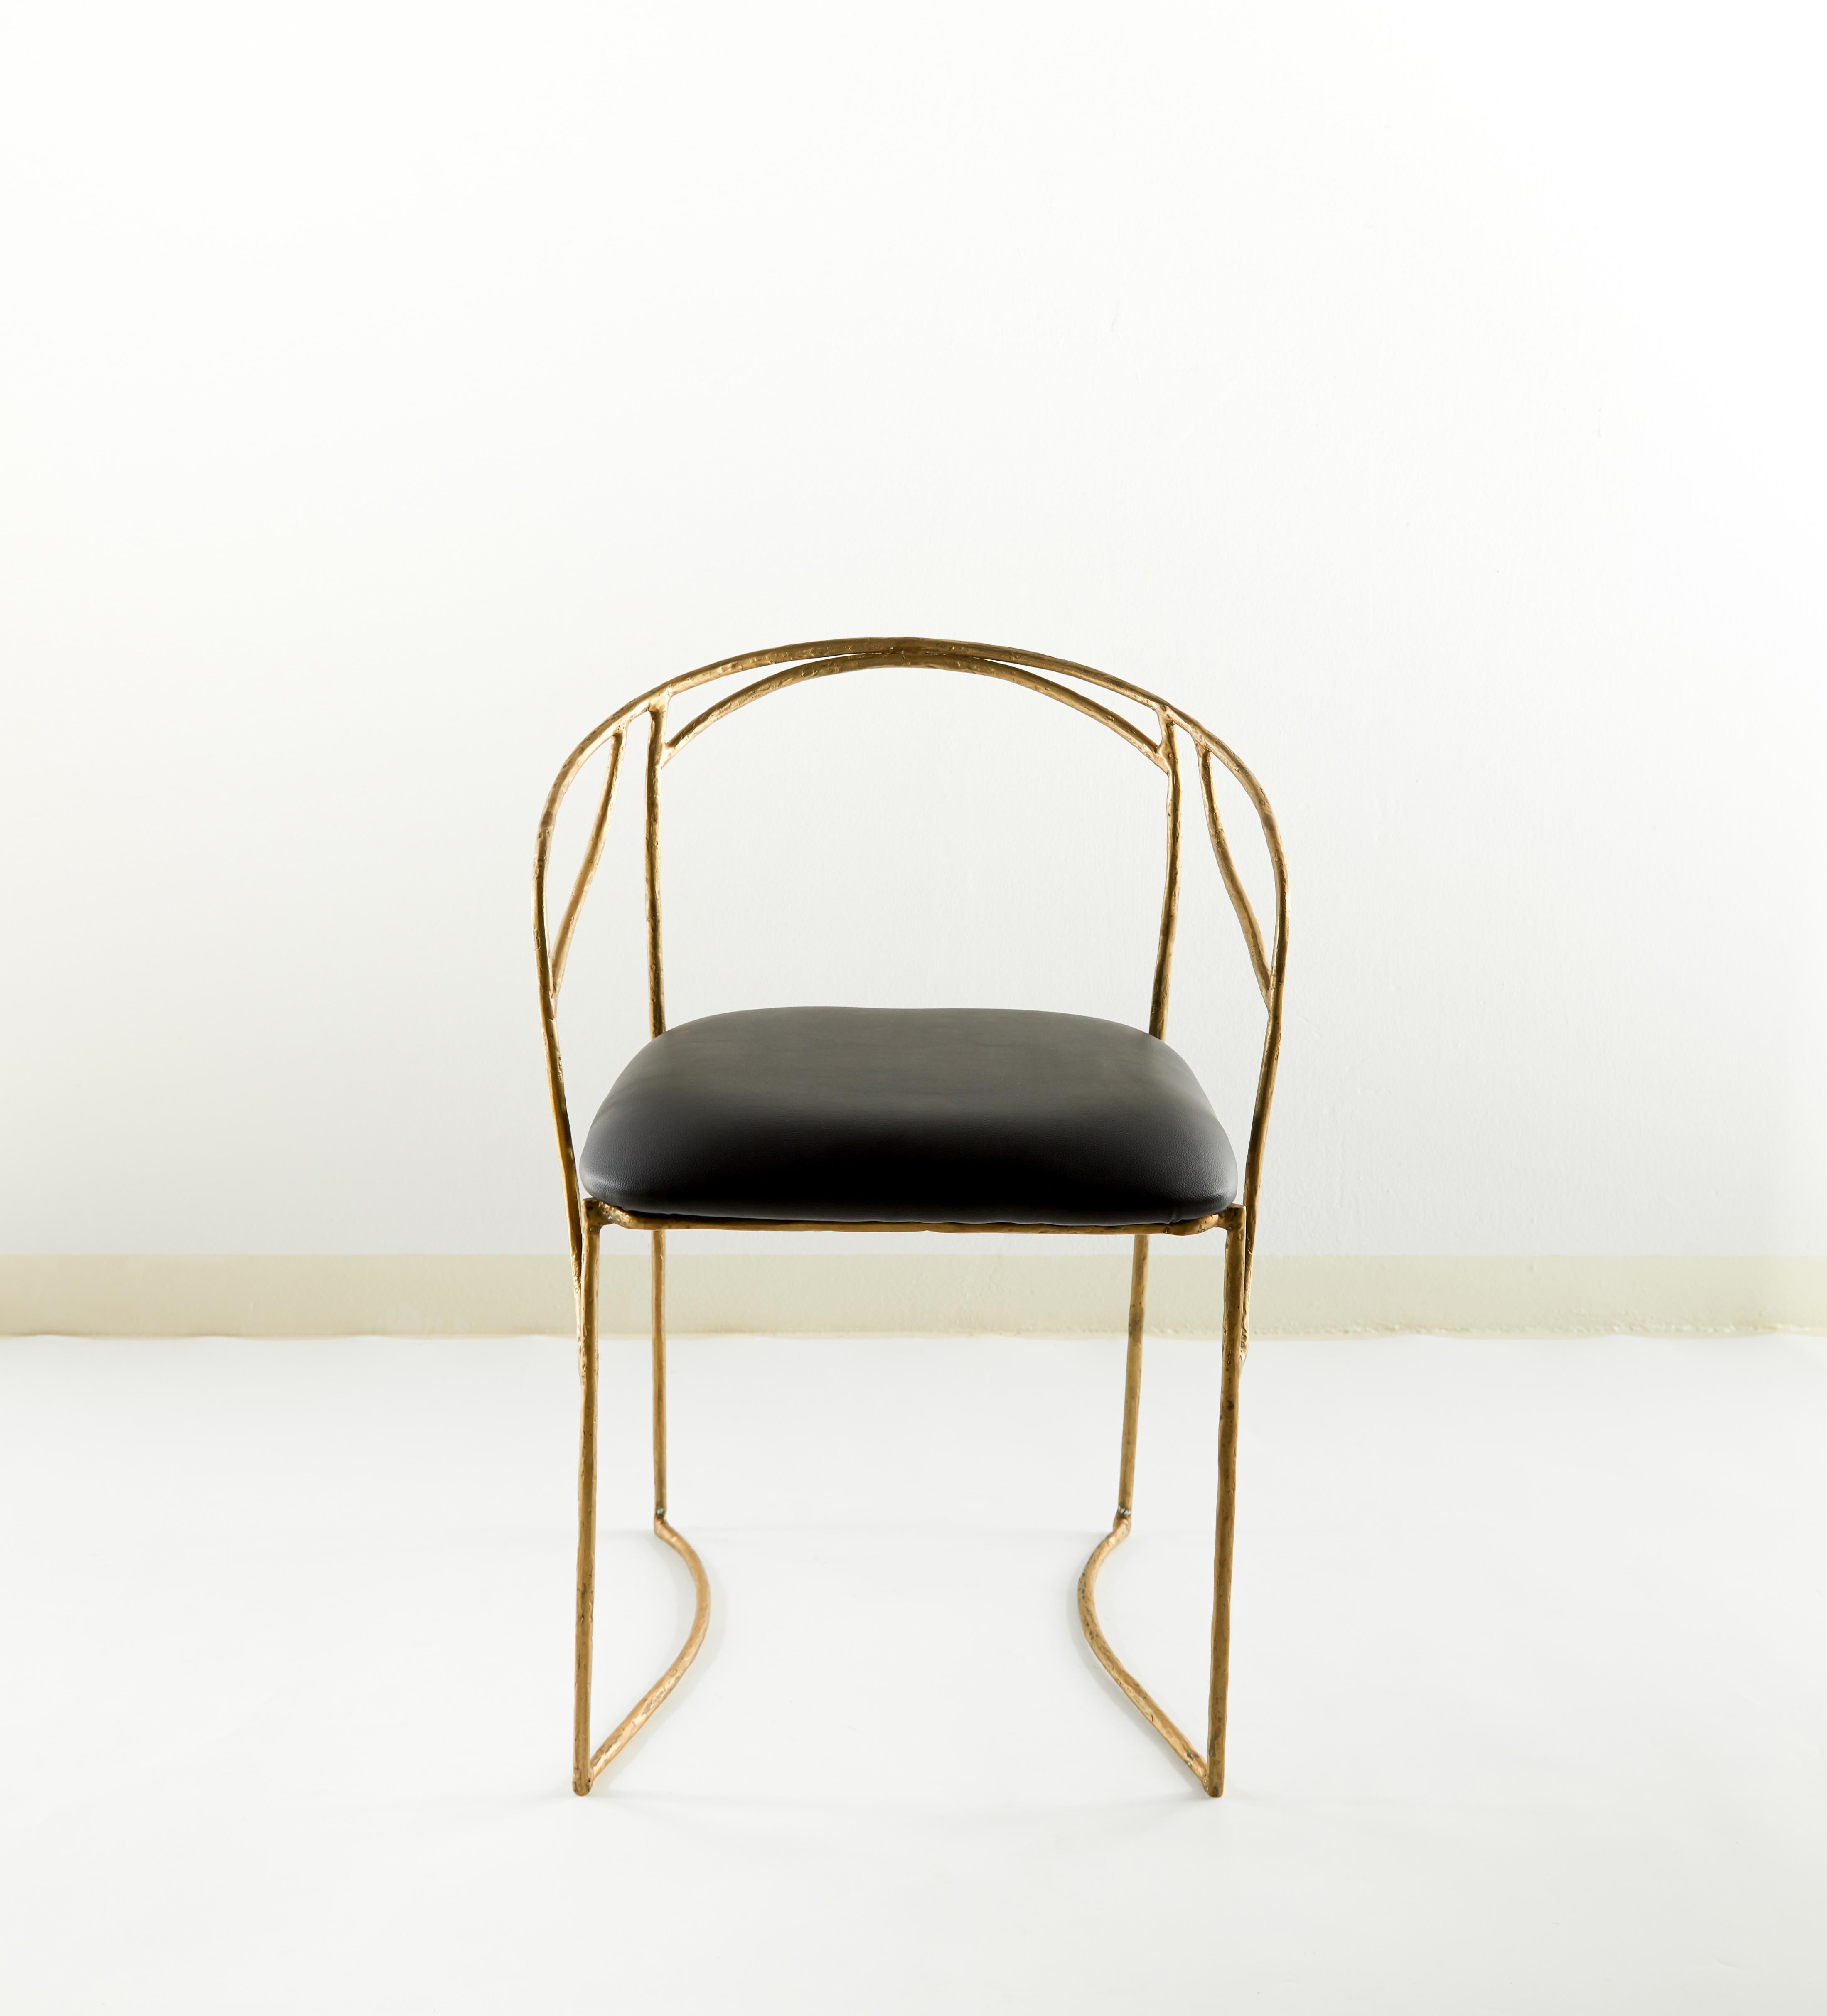 Chair by Masaya
Dimensions: 79 x 56 x 48 cm
Brass
Handsculpted.
 